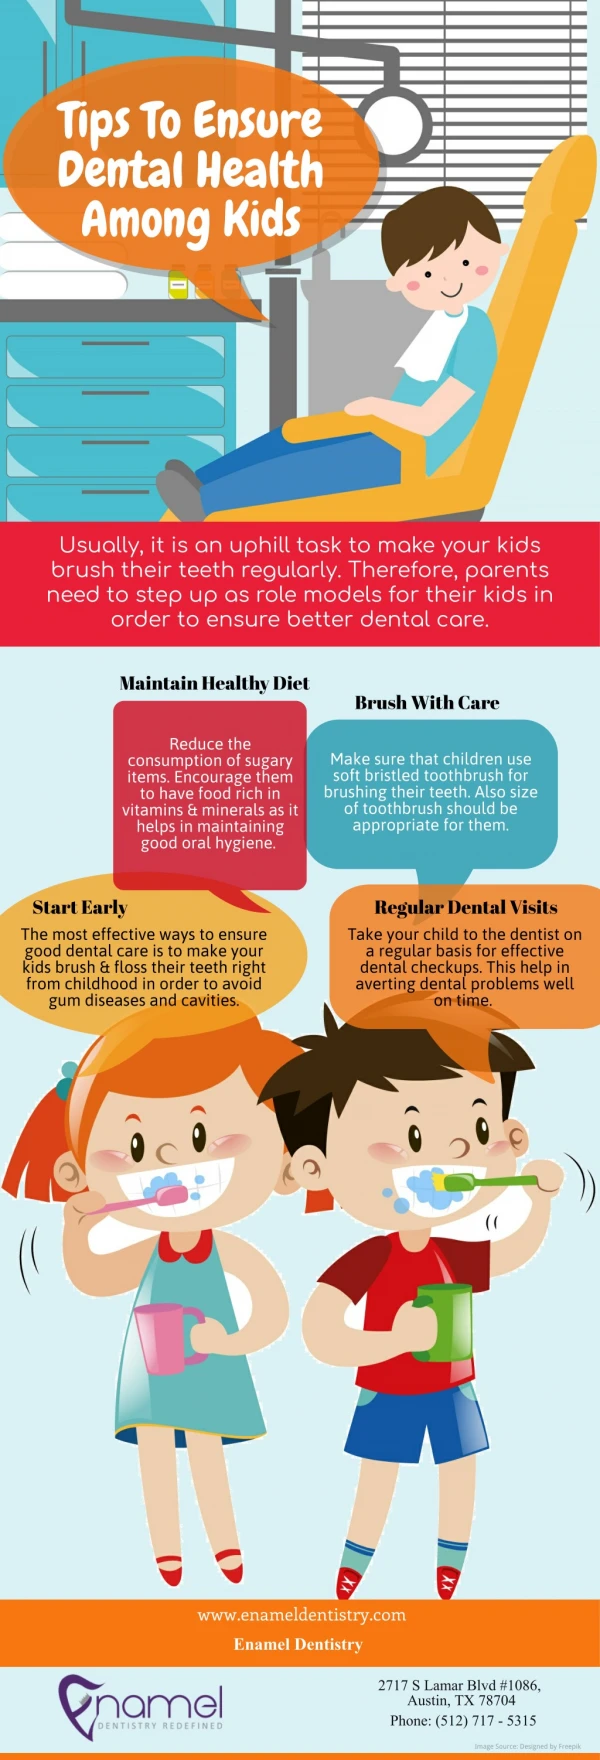 Tips To Ensure Dental Health Among Kids